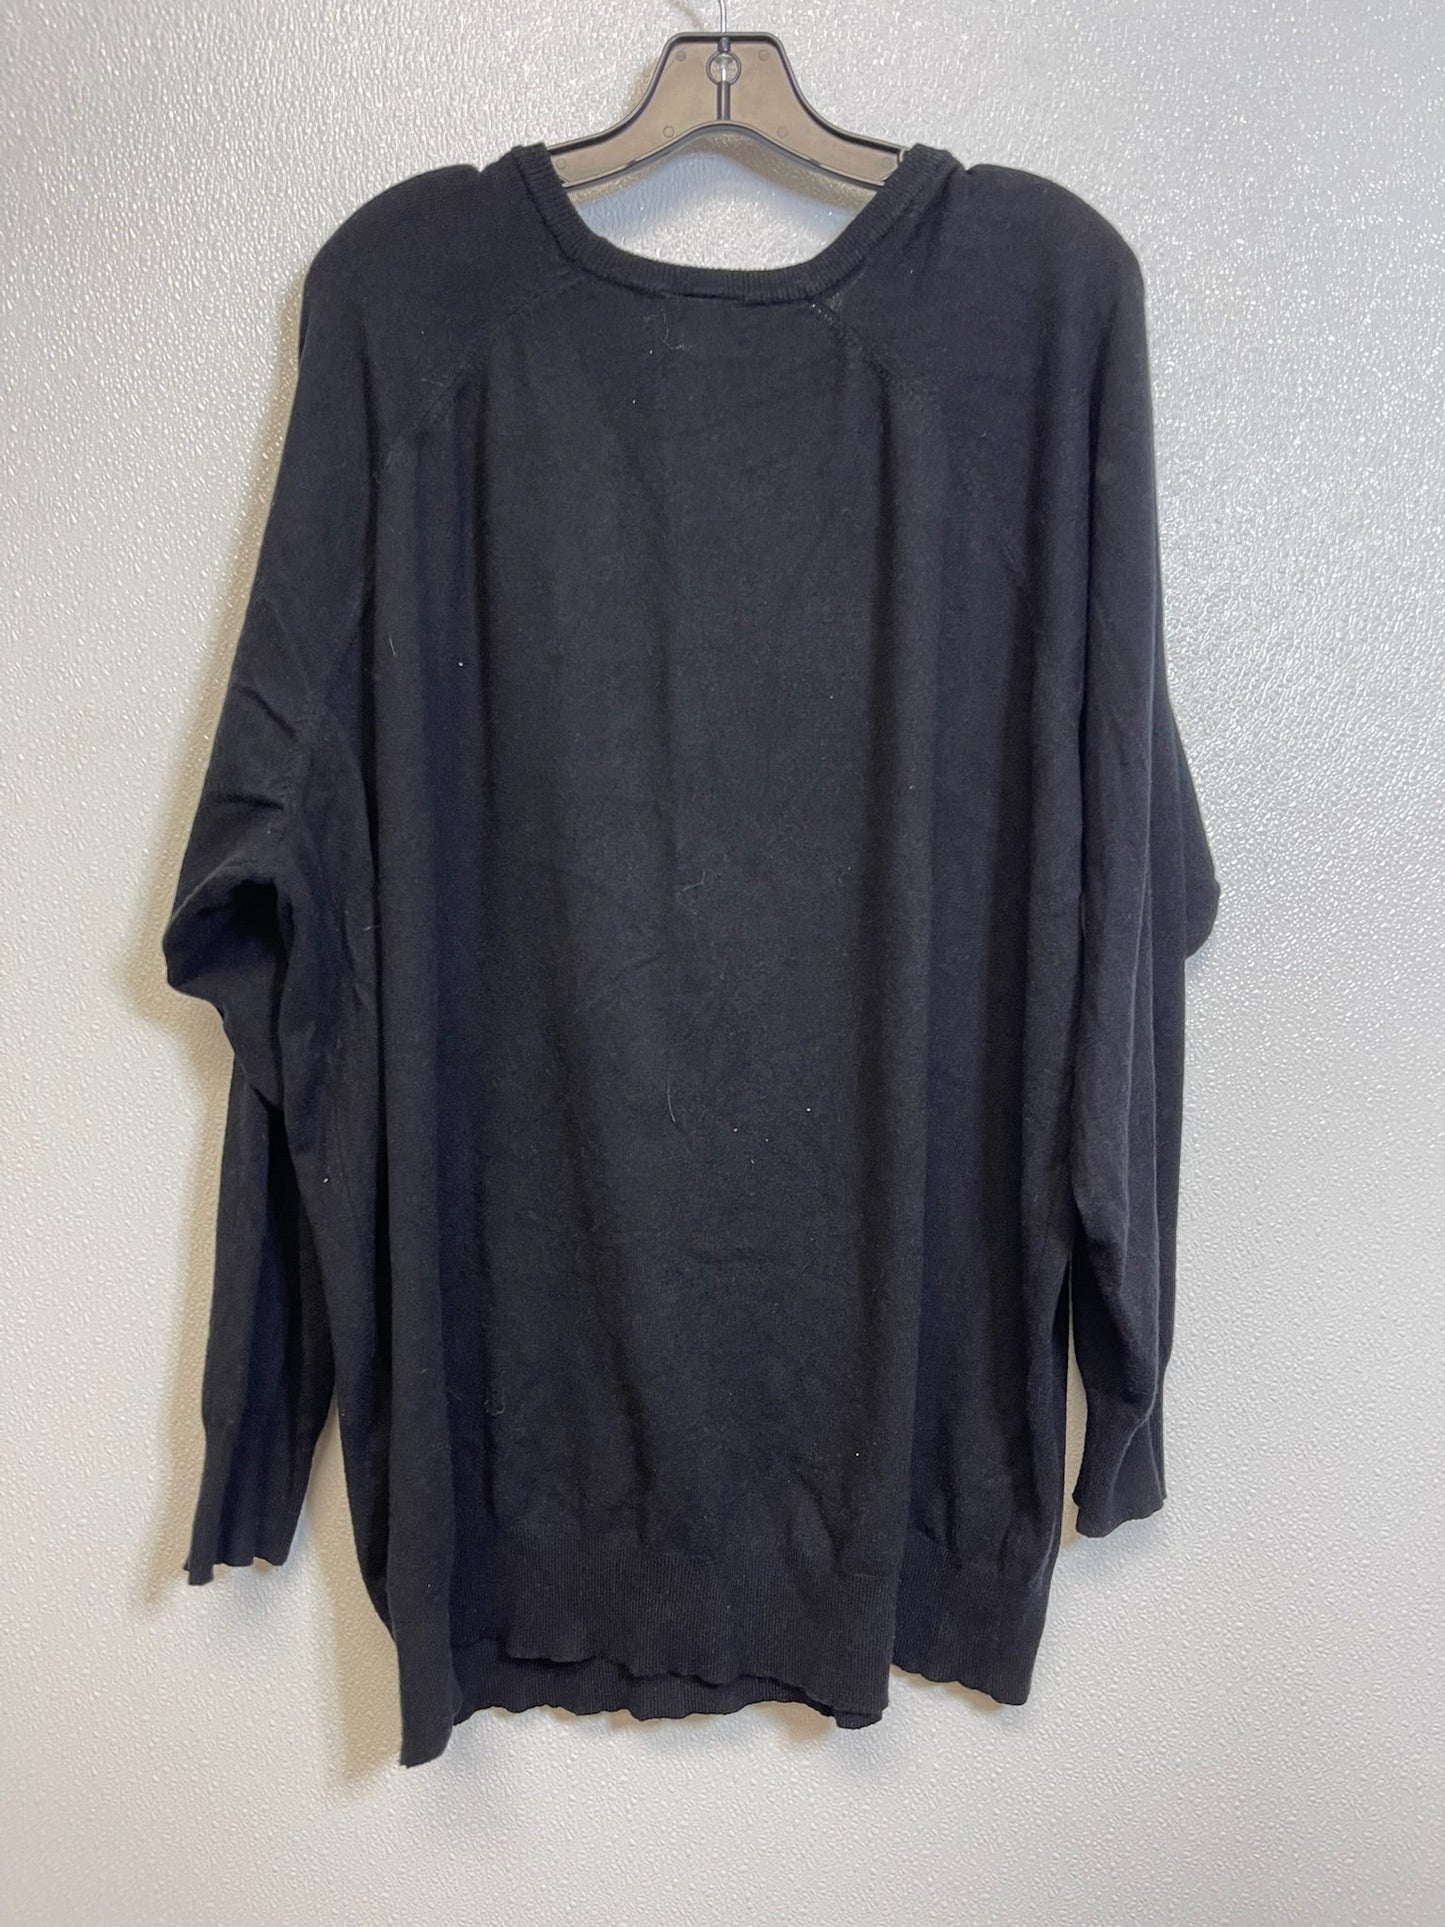 Black Sweater Torrid, Size 4